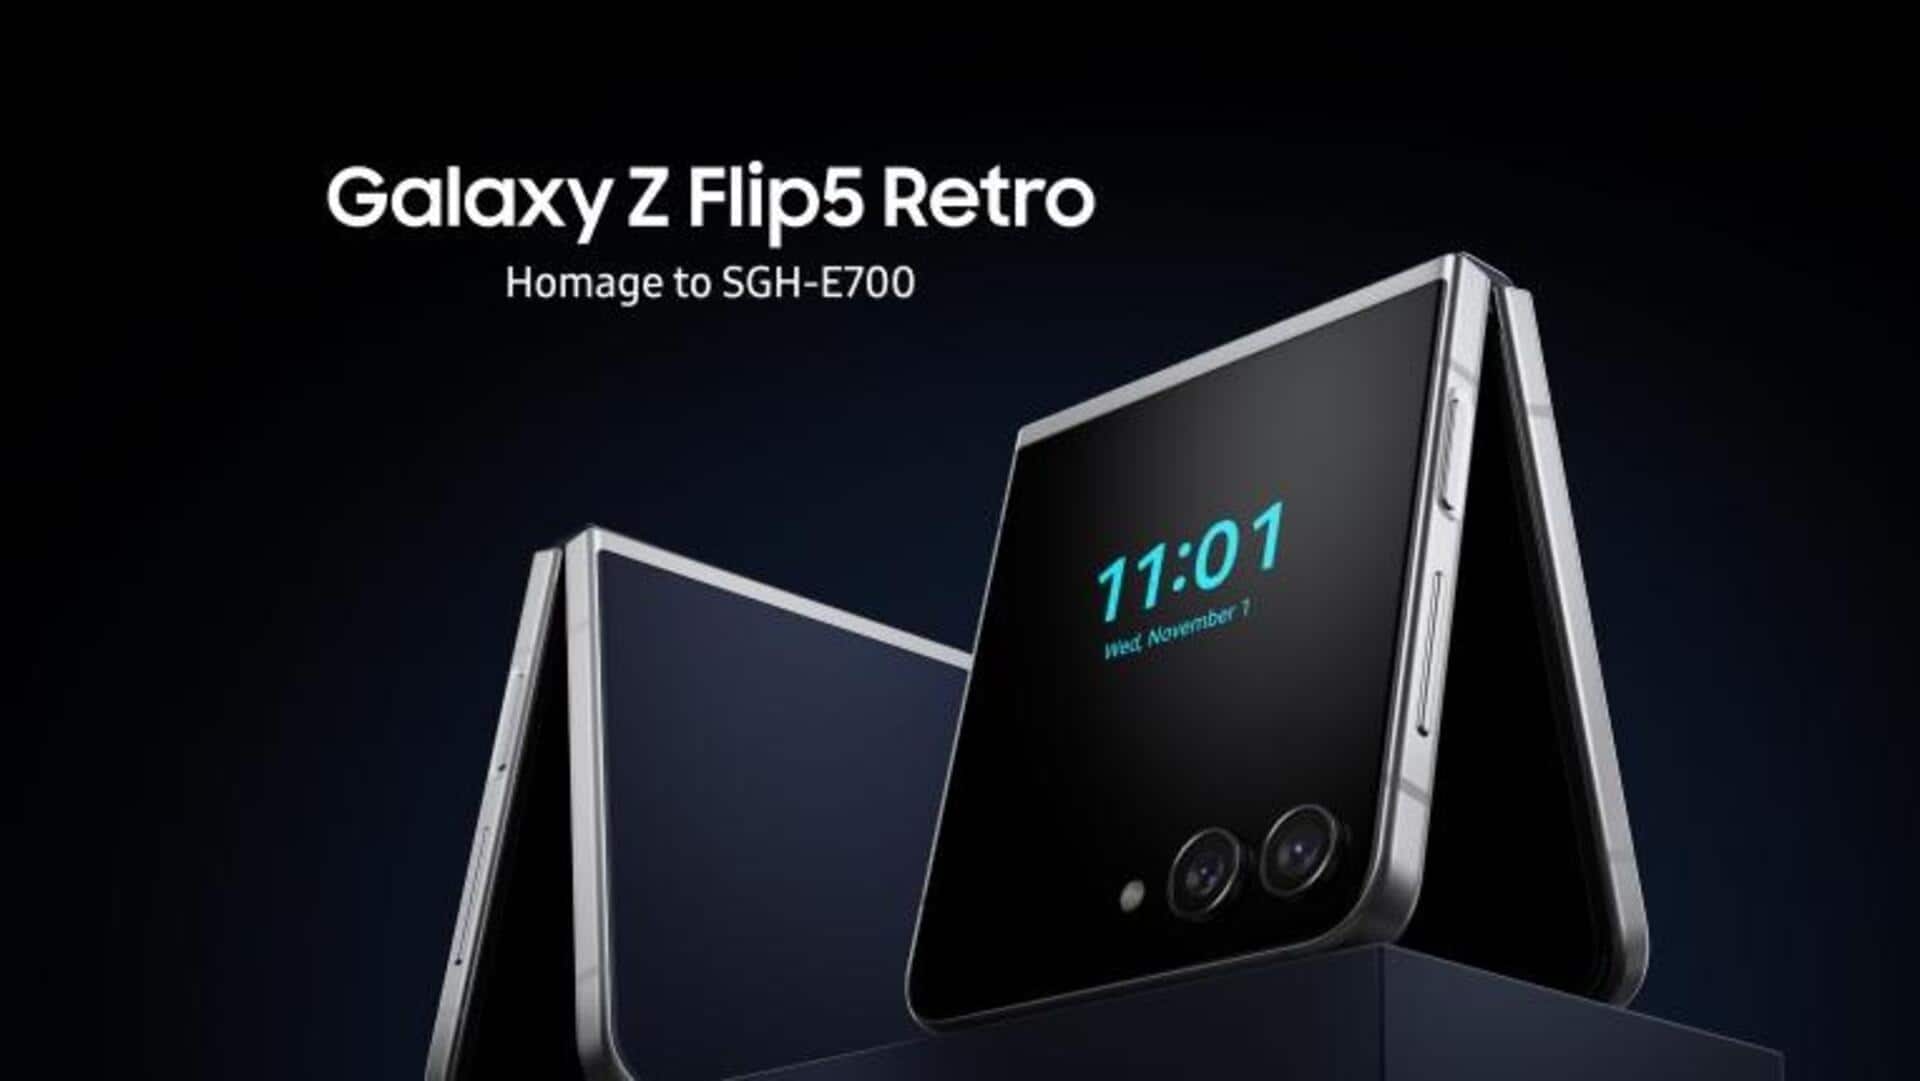 Samsung unveils Galaxy Z Flip5 Retro limited edition phone